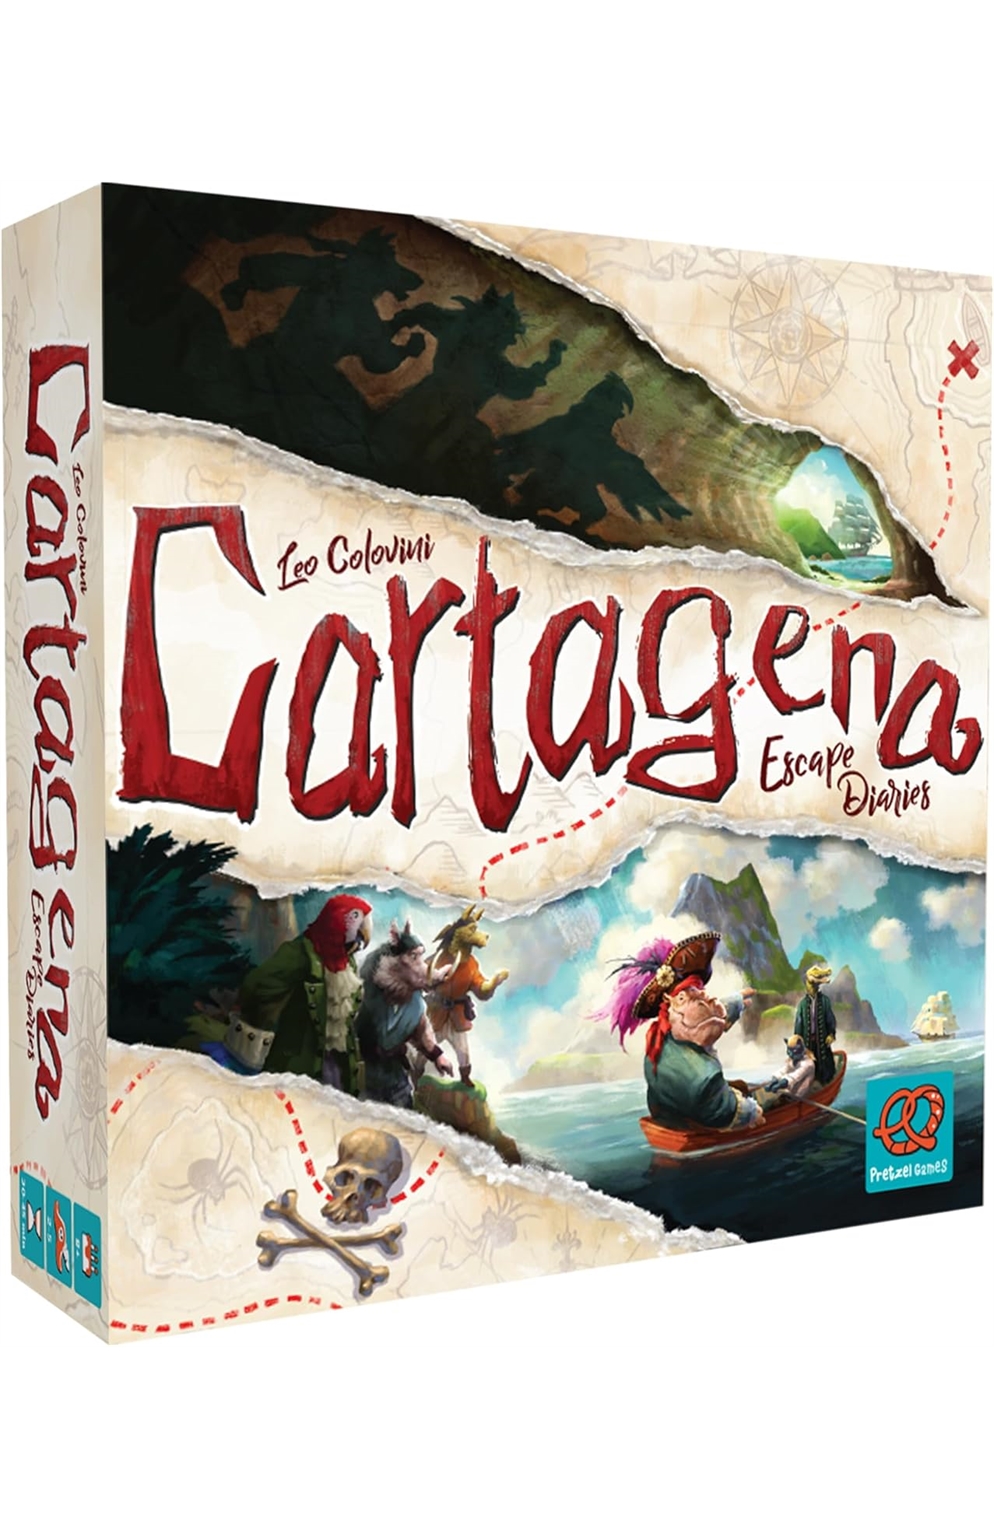 Cartagena Escape Diaries Board Game